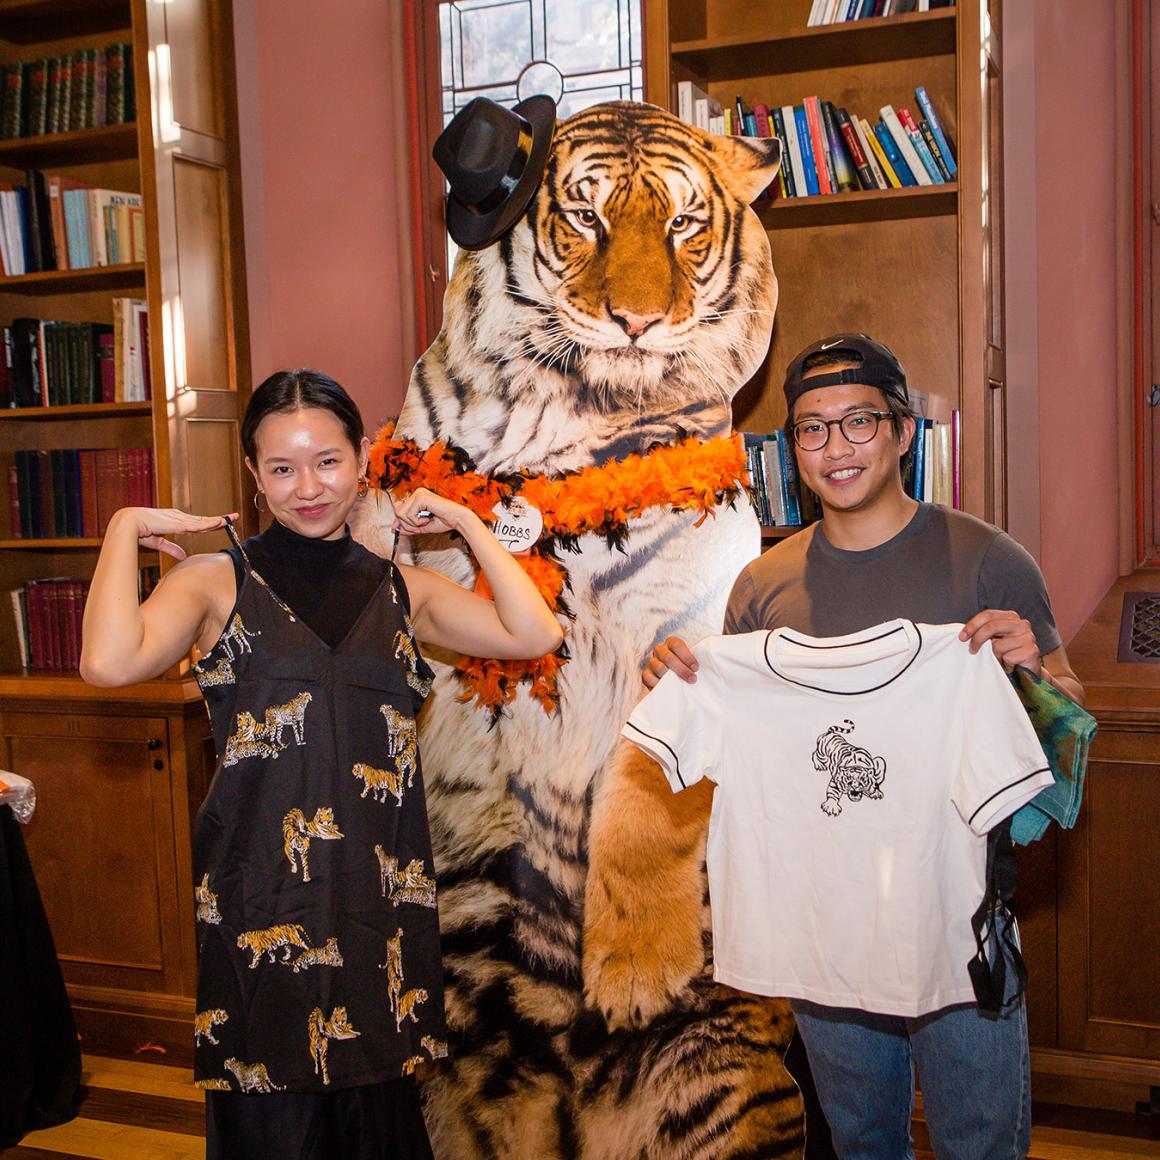 Alumni fashioning Tiger gear at the 2022 ROAR event